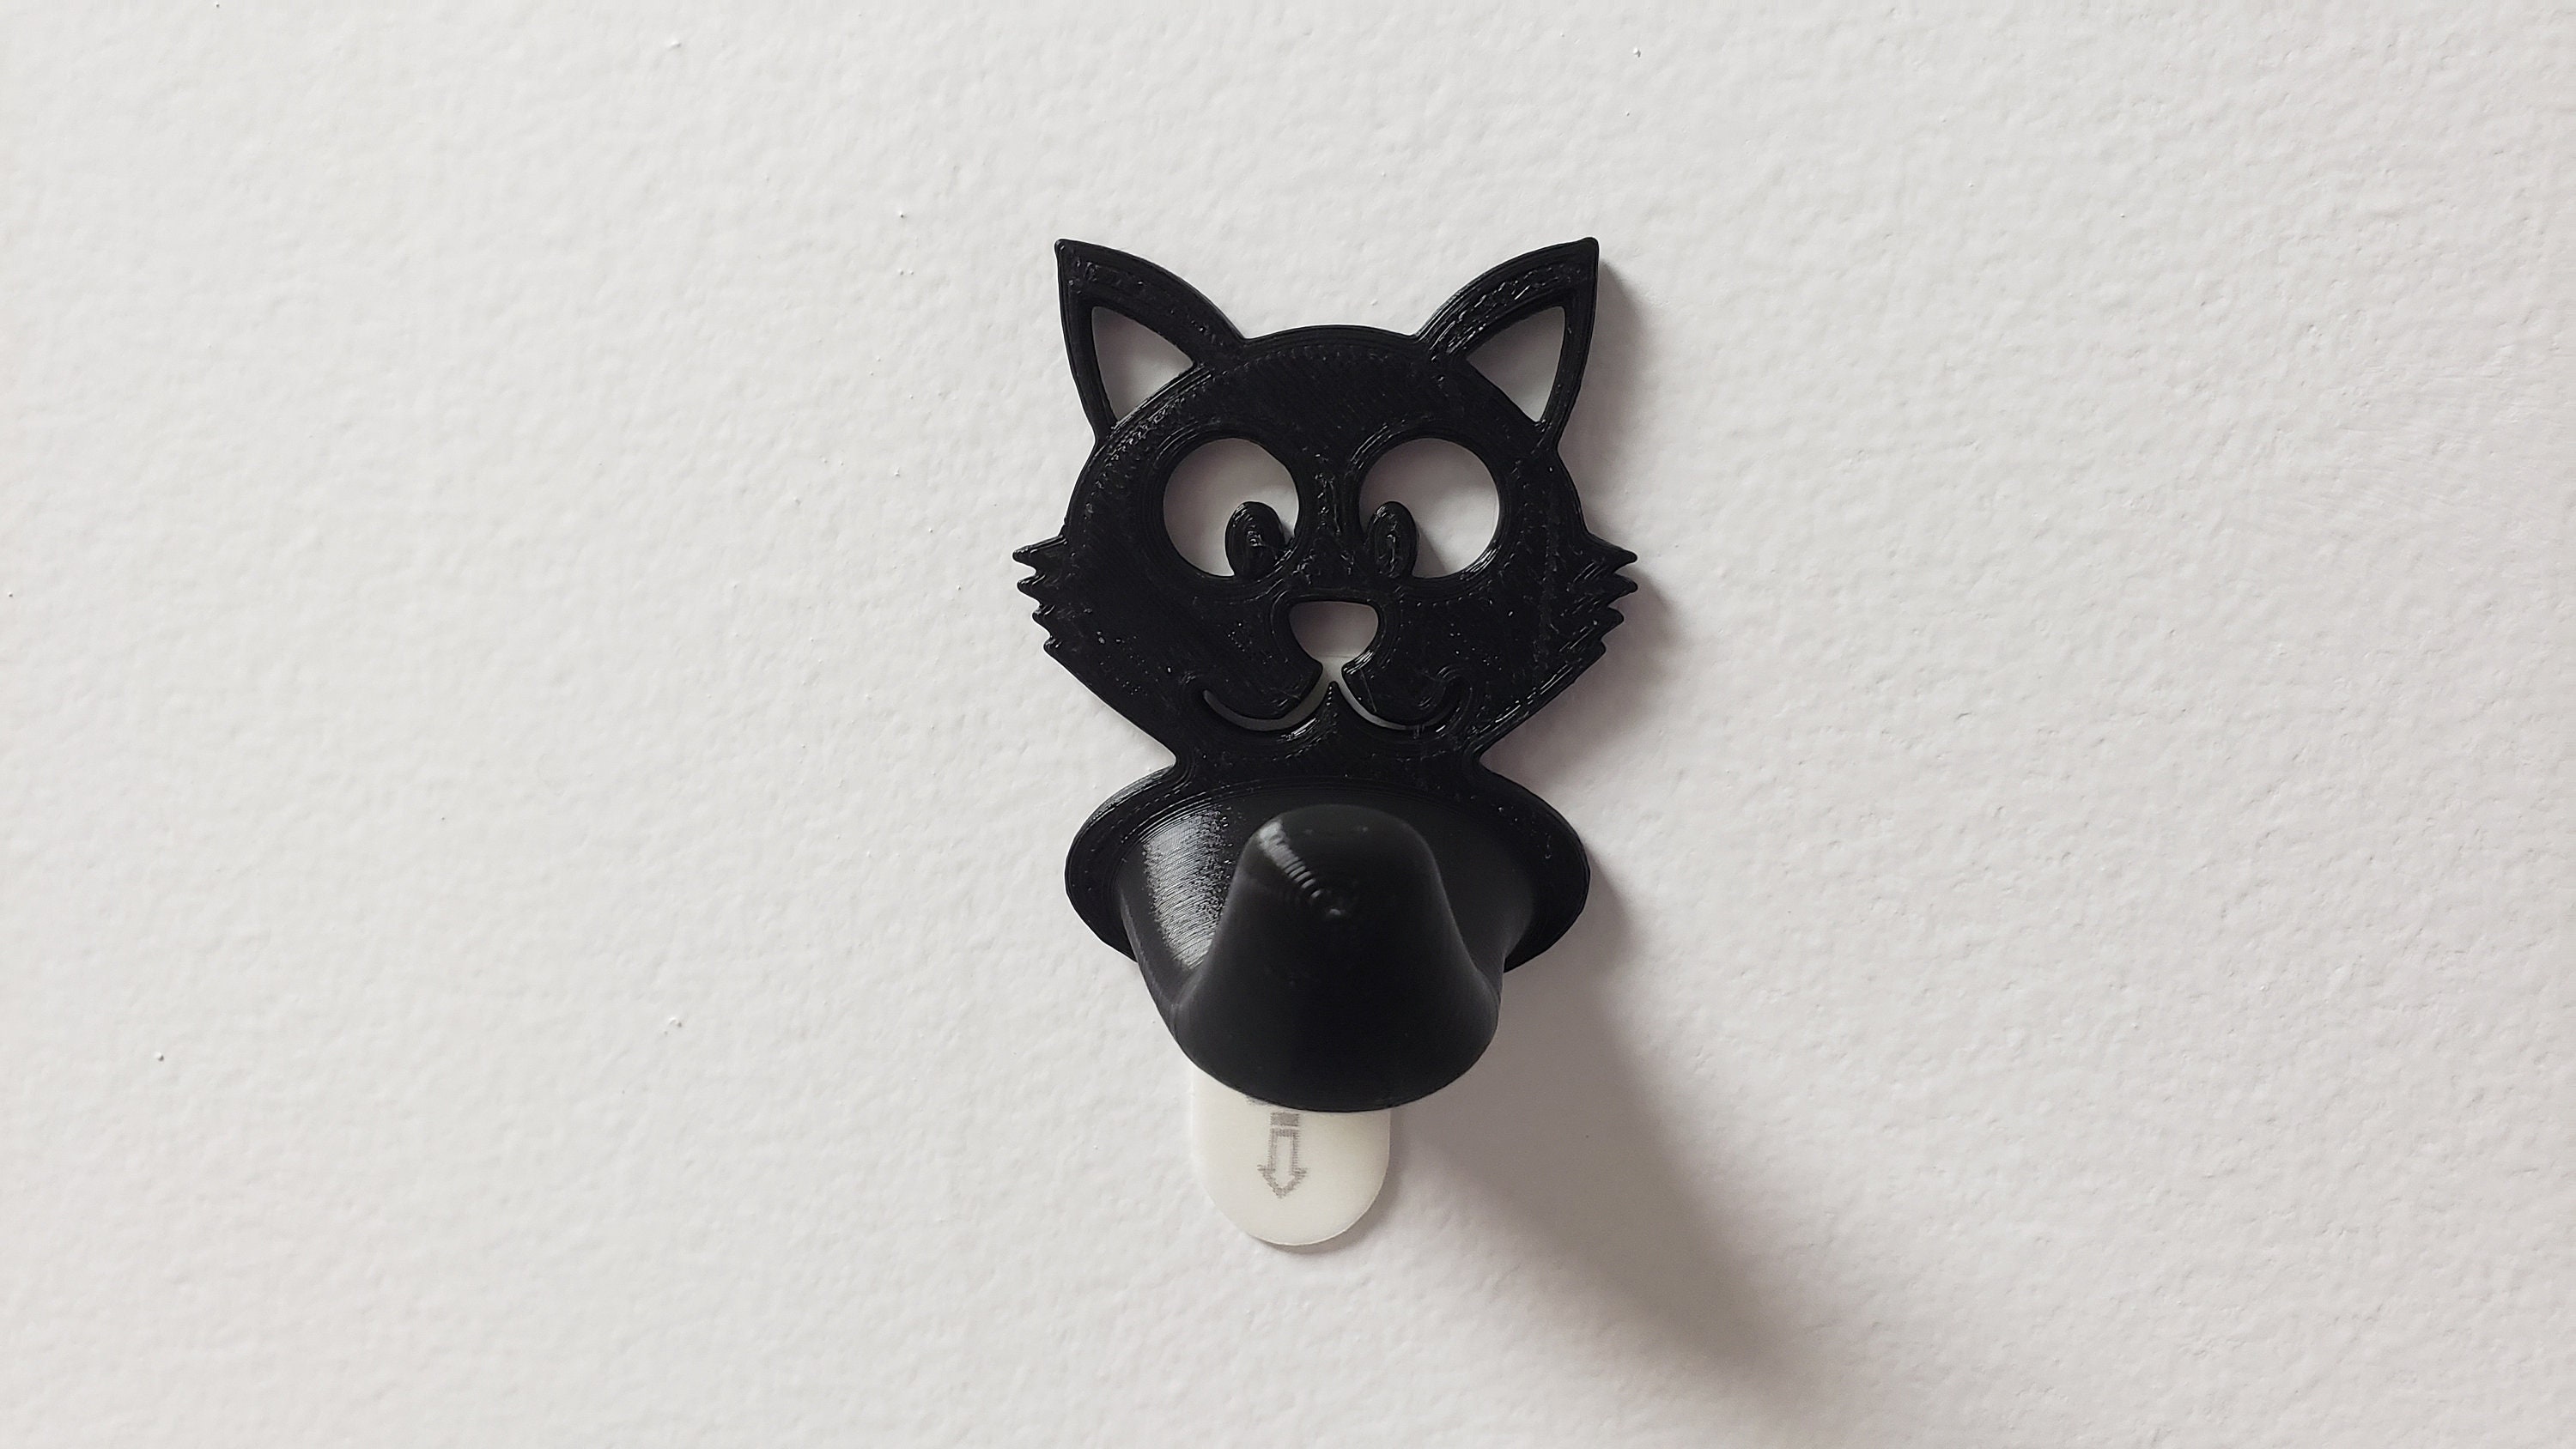  XINGJIANG Cast Iron Cat Key Hooks for Wall Decorative CatFamily Key  Holder Leash Holder Black Cat Wall Hooks Hanger Gift for Cat Lovers, Cat  Key Holder for Hanging Keys Coat Towel